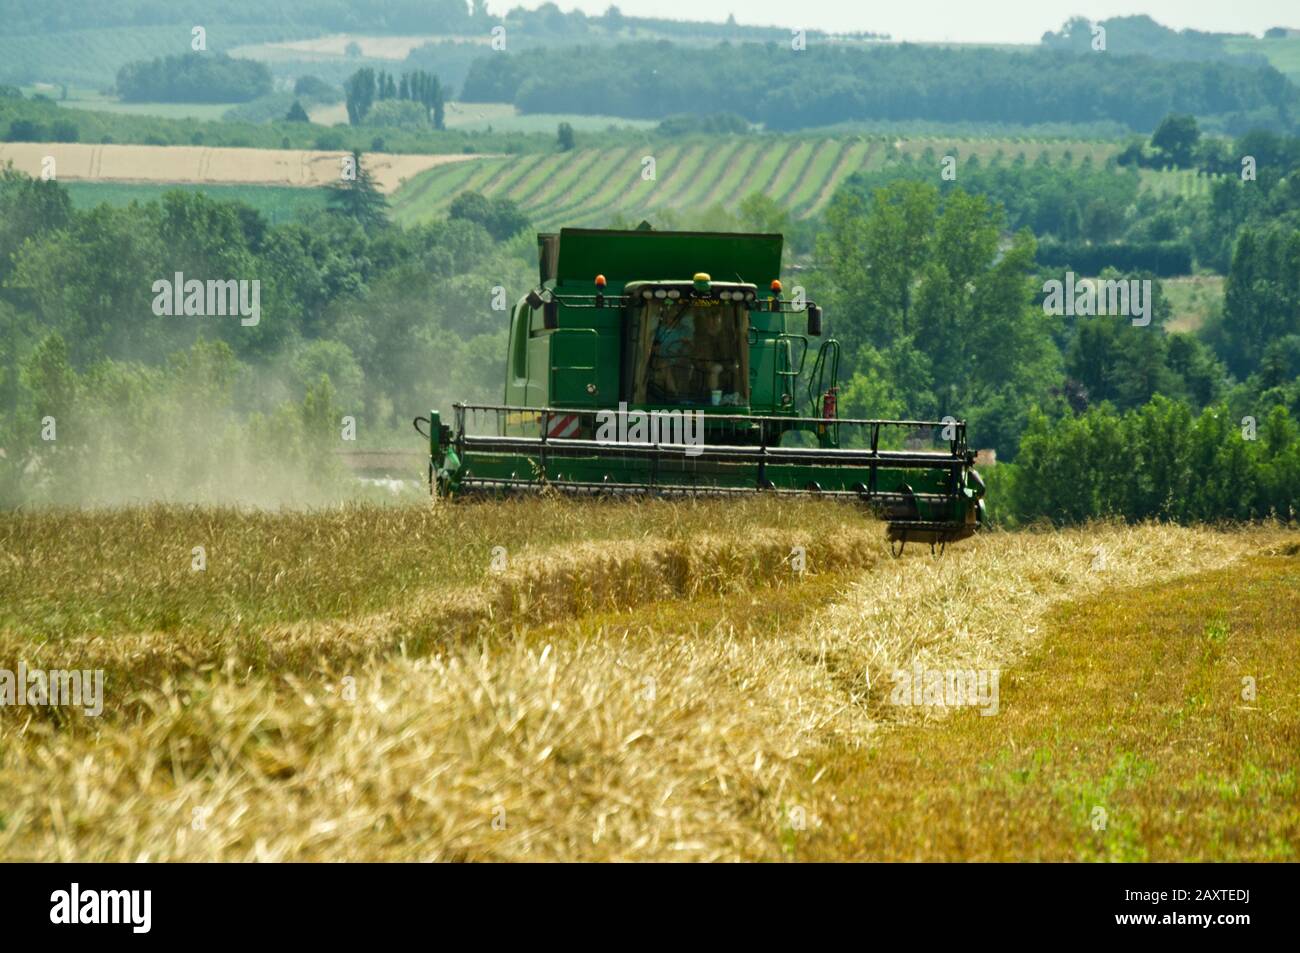 Harvesting wheat near Duras, Lot-et-Garonne, France with a John Deere T670 Hillmaster combine harvester. Stock Photo